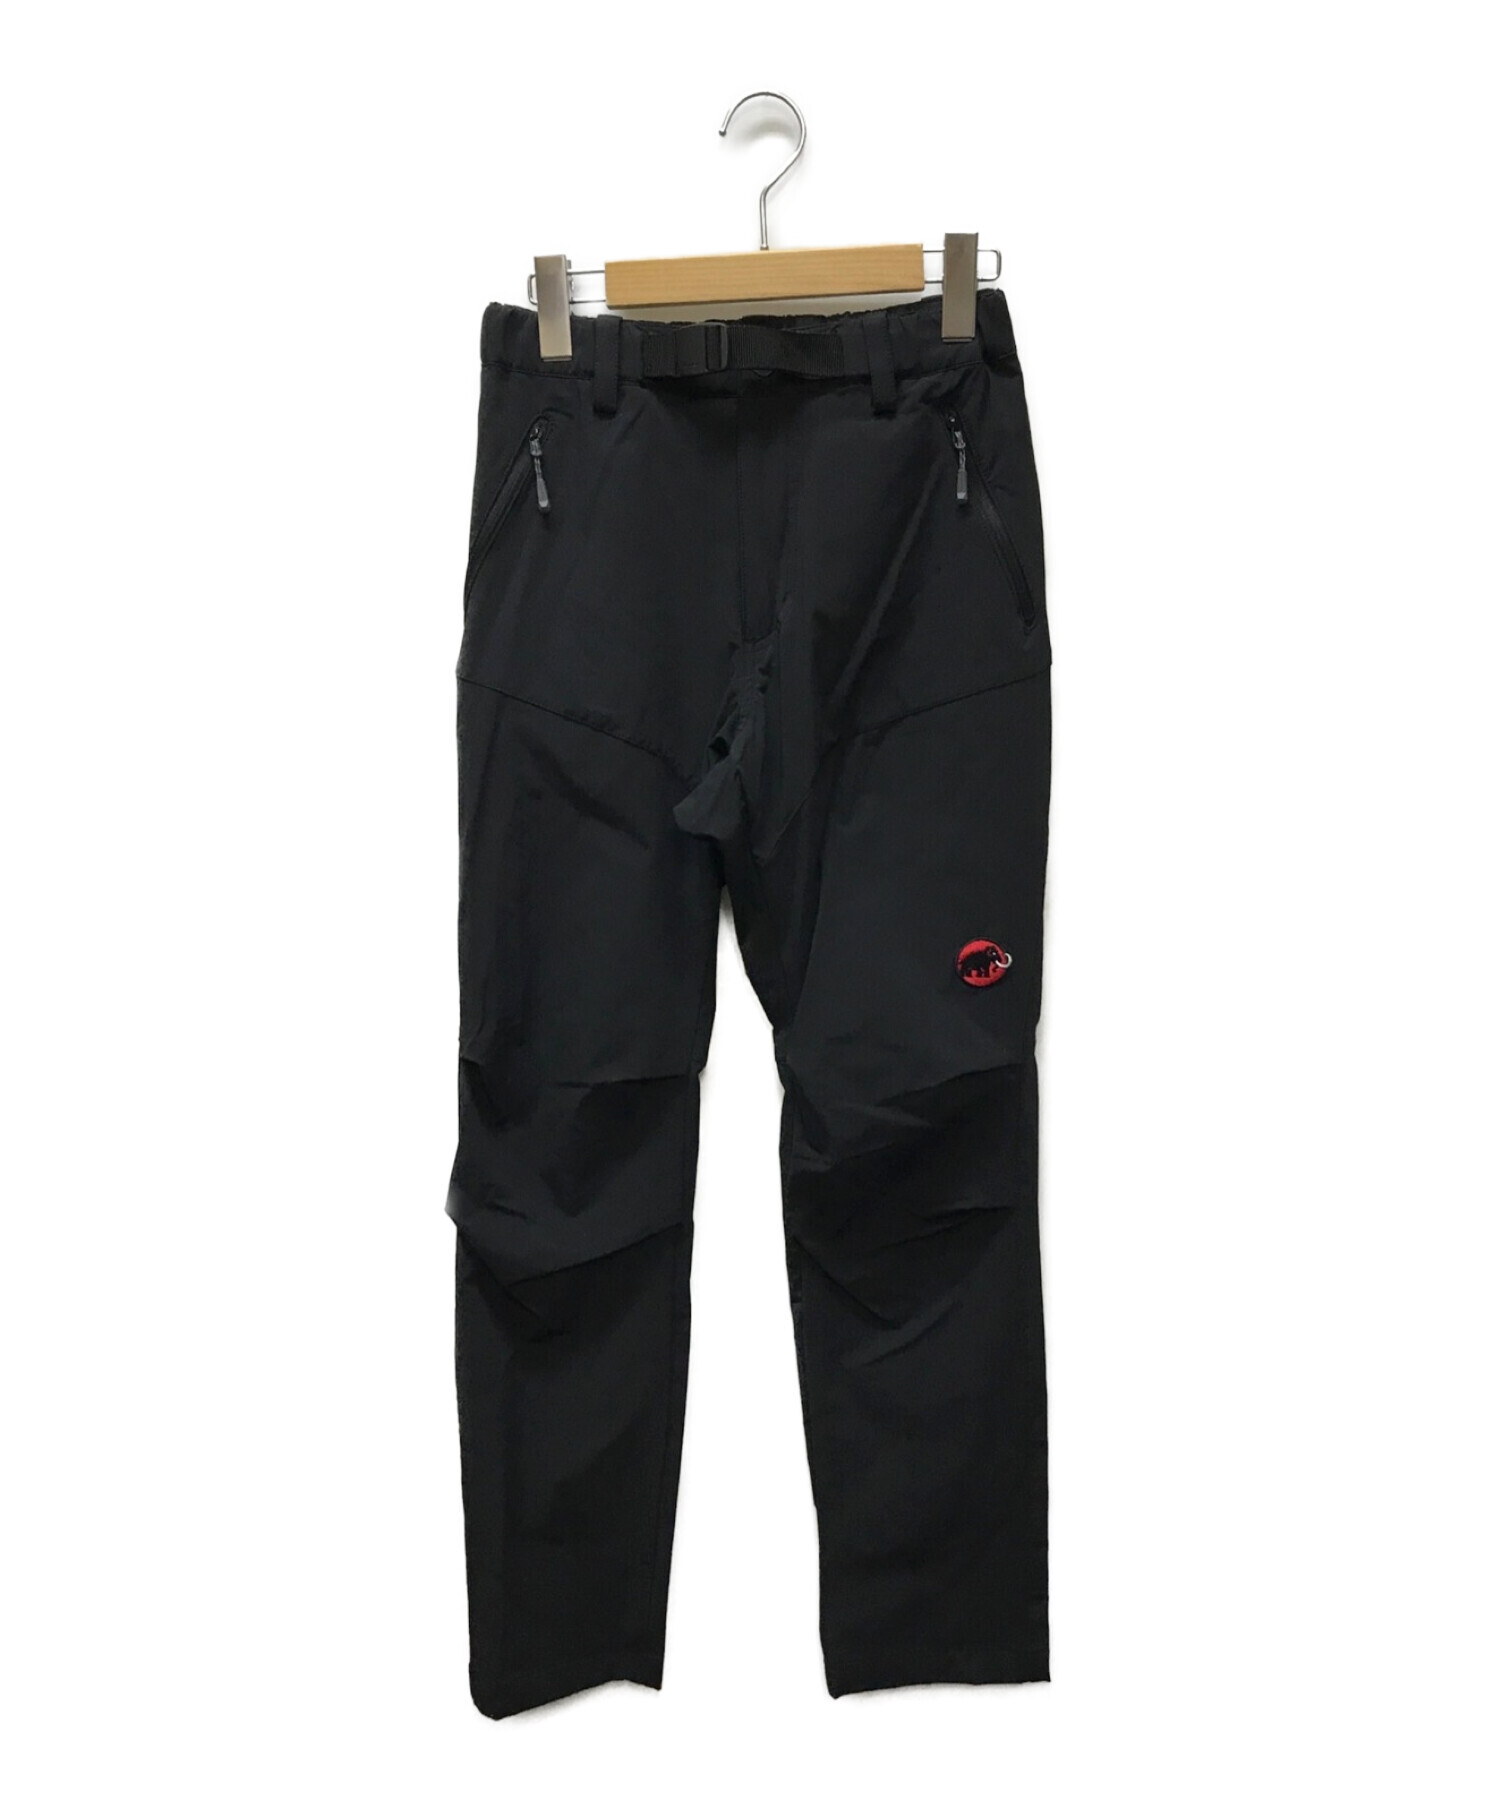 Mammut Zip-off System Trekking Mountain Trousers Pants Size M